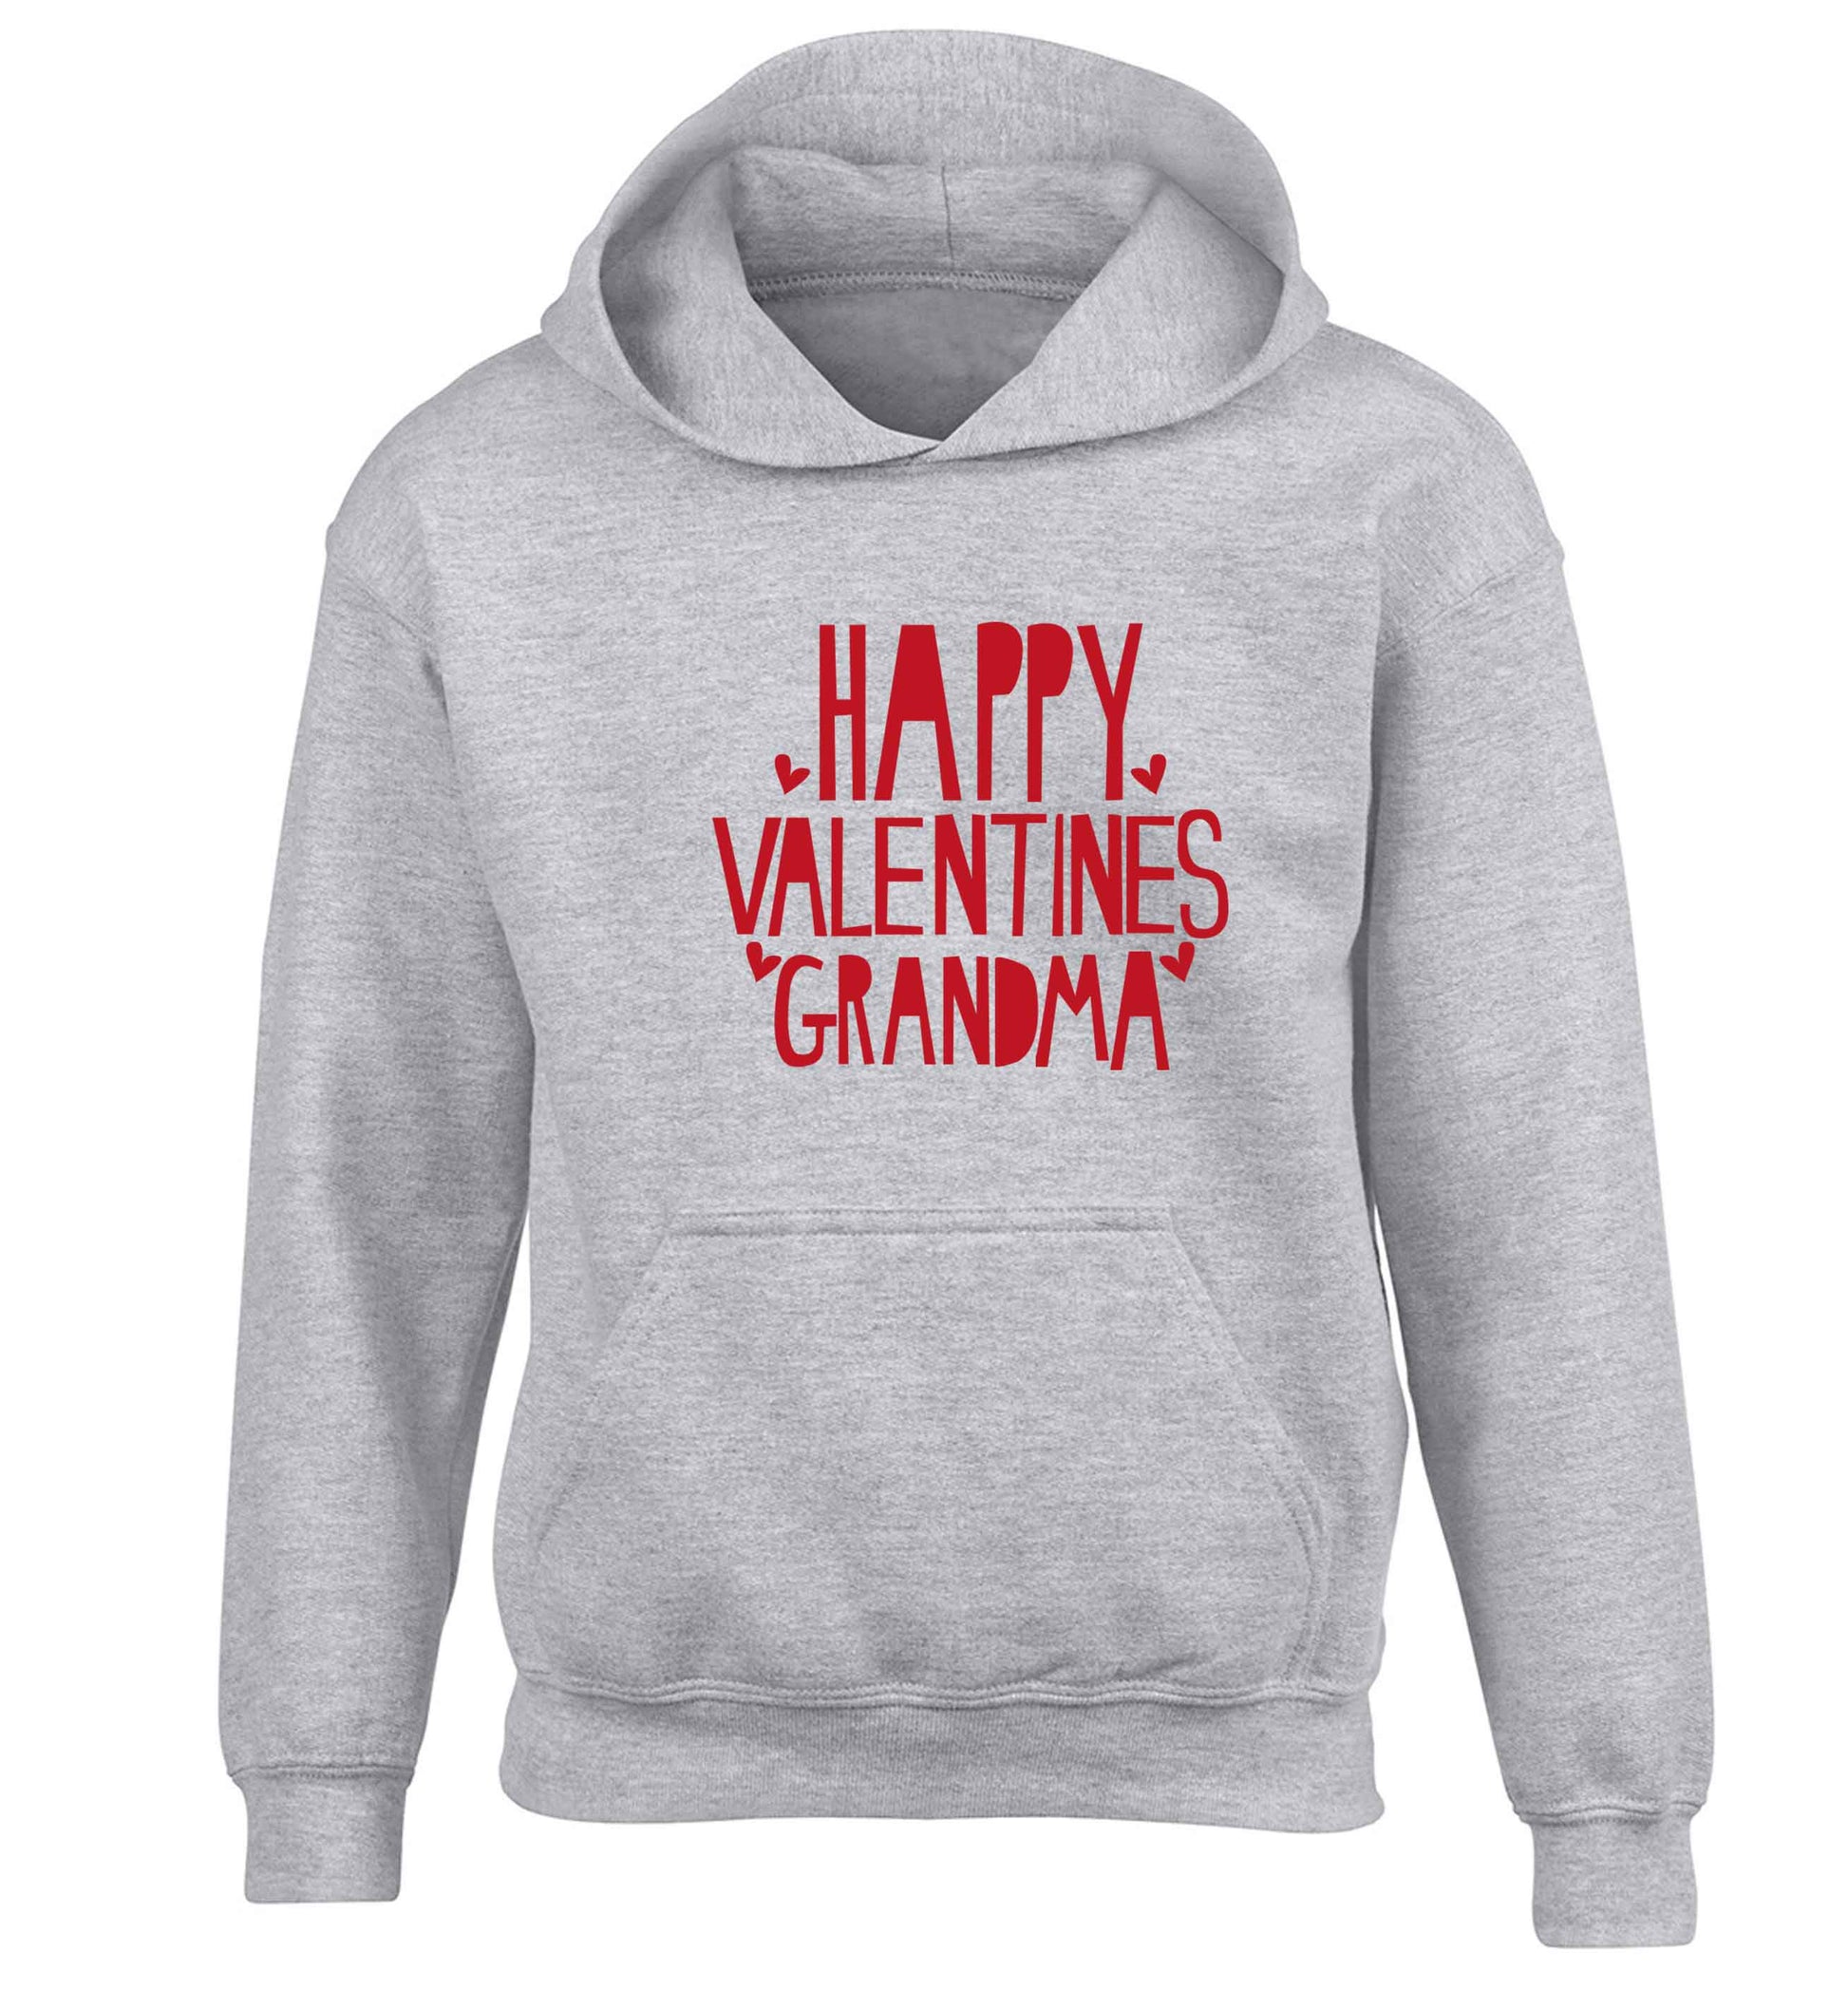 Happy valentines grandma children's grey hoodie 12-13 Years